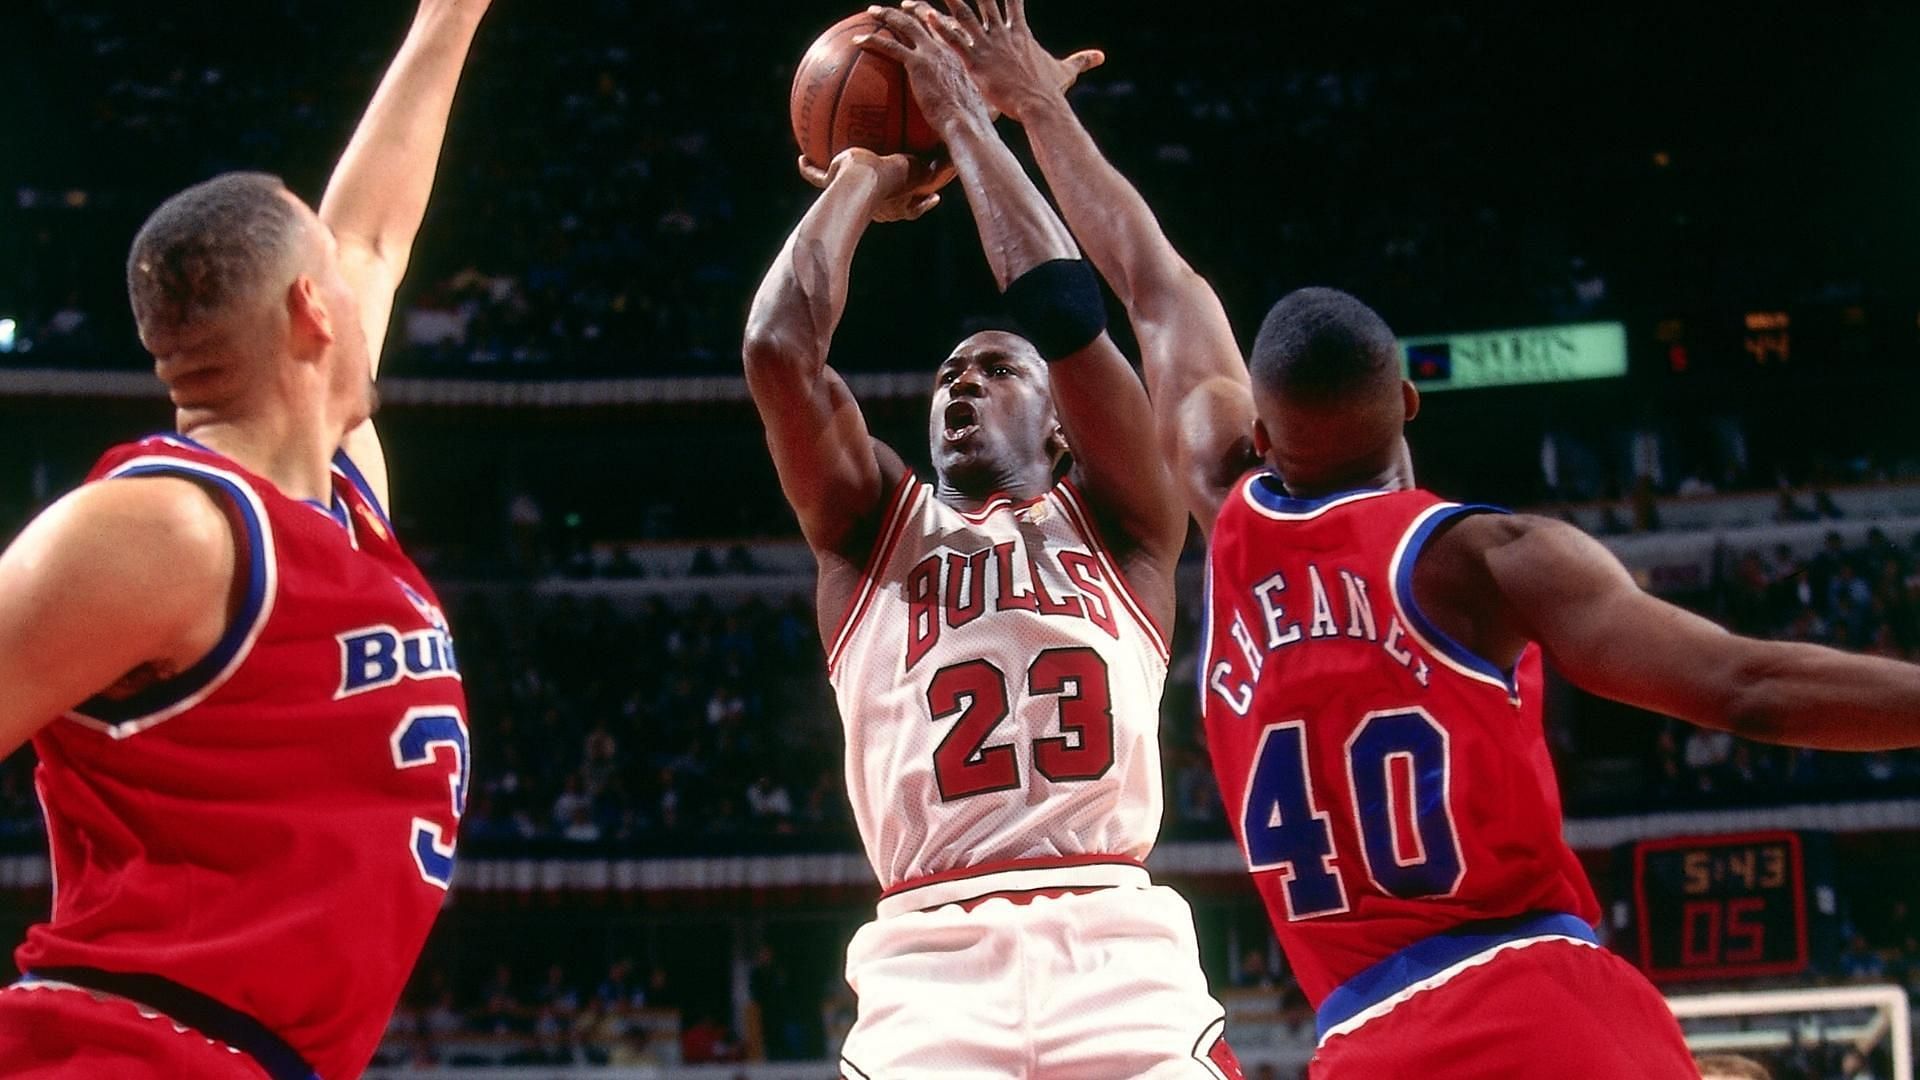 Michael Jordan shooting over two Washington Bullets players. (Photo: Sporting News)